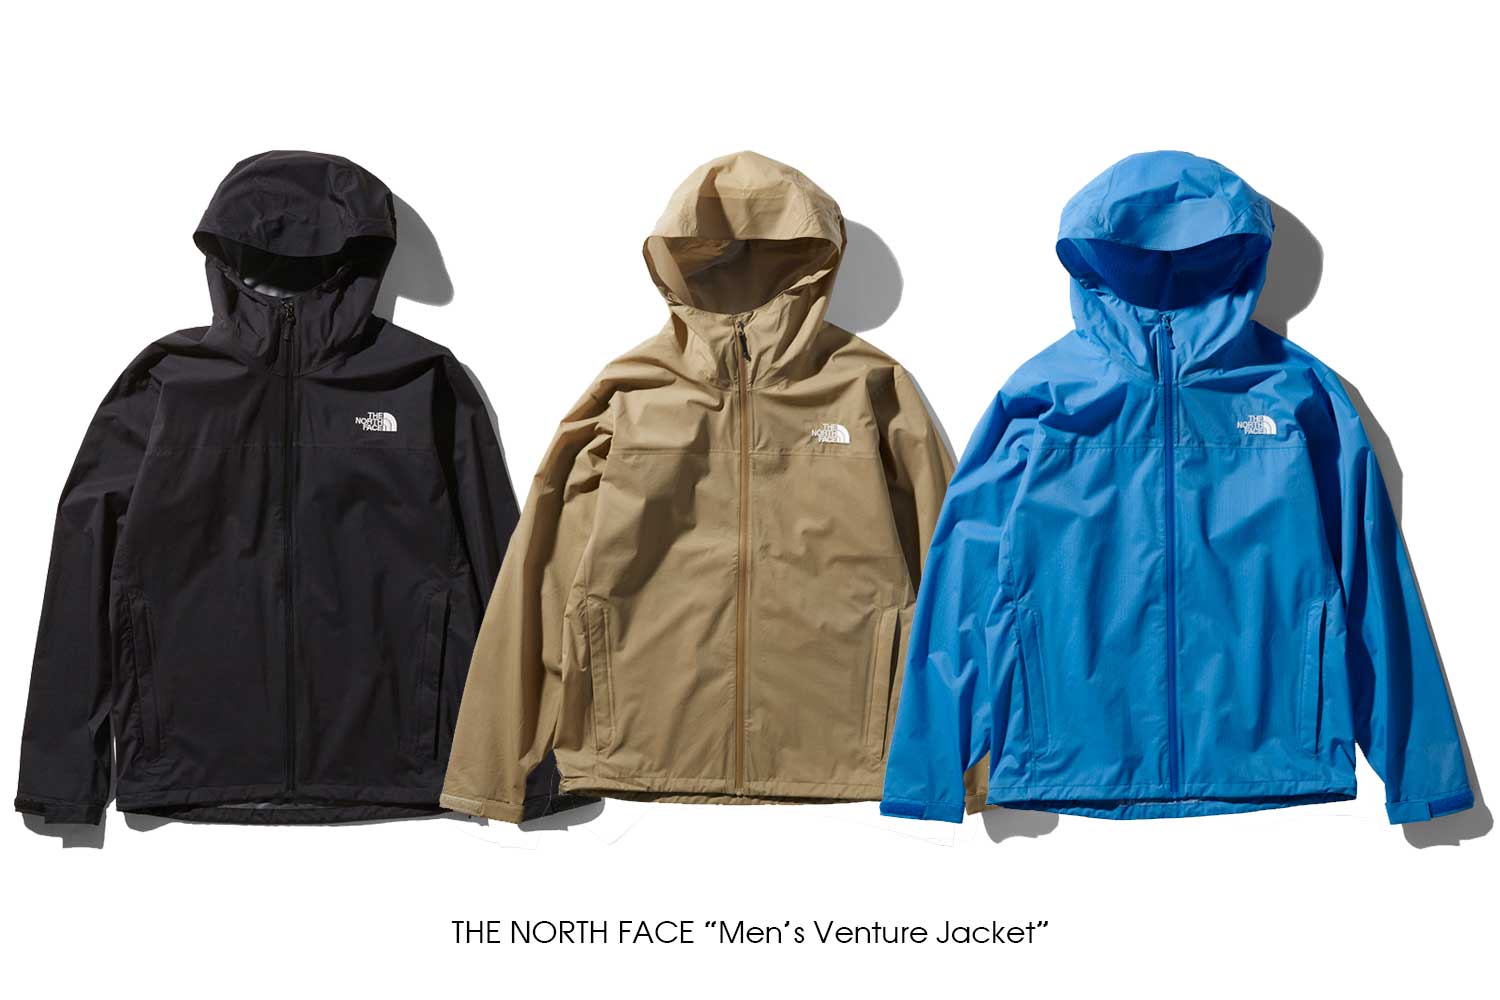 THE NORTH FACE "Men's Venture Jacket"